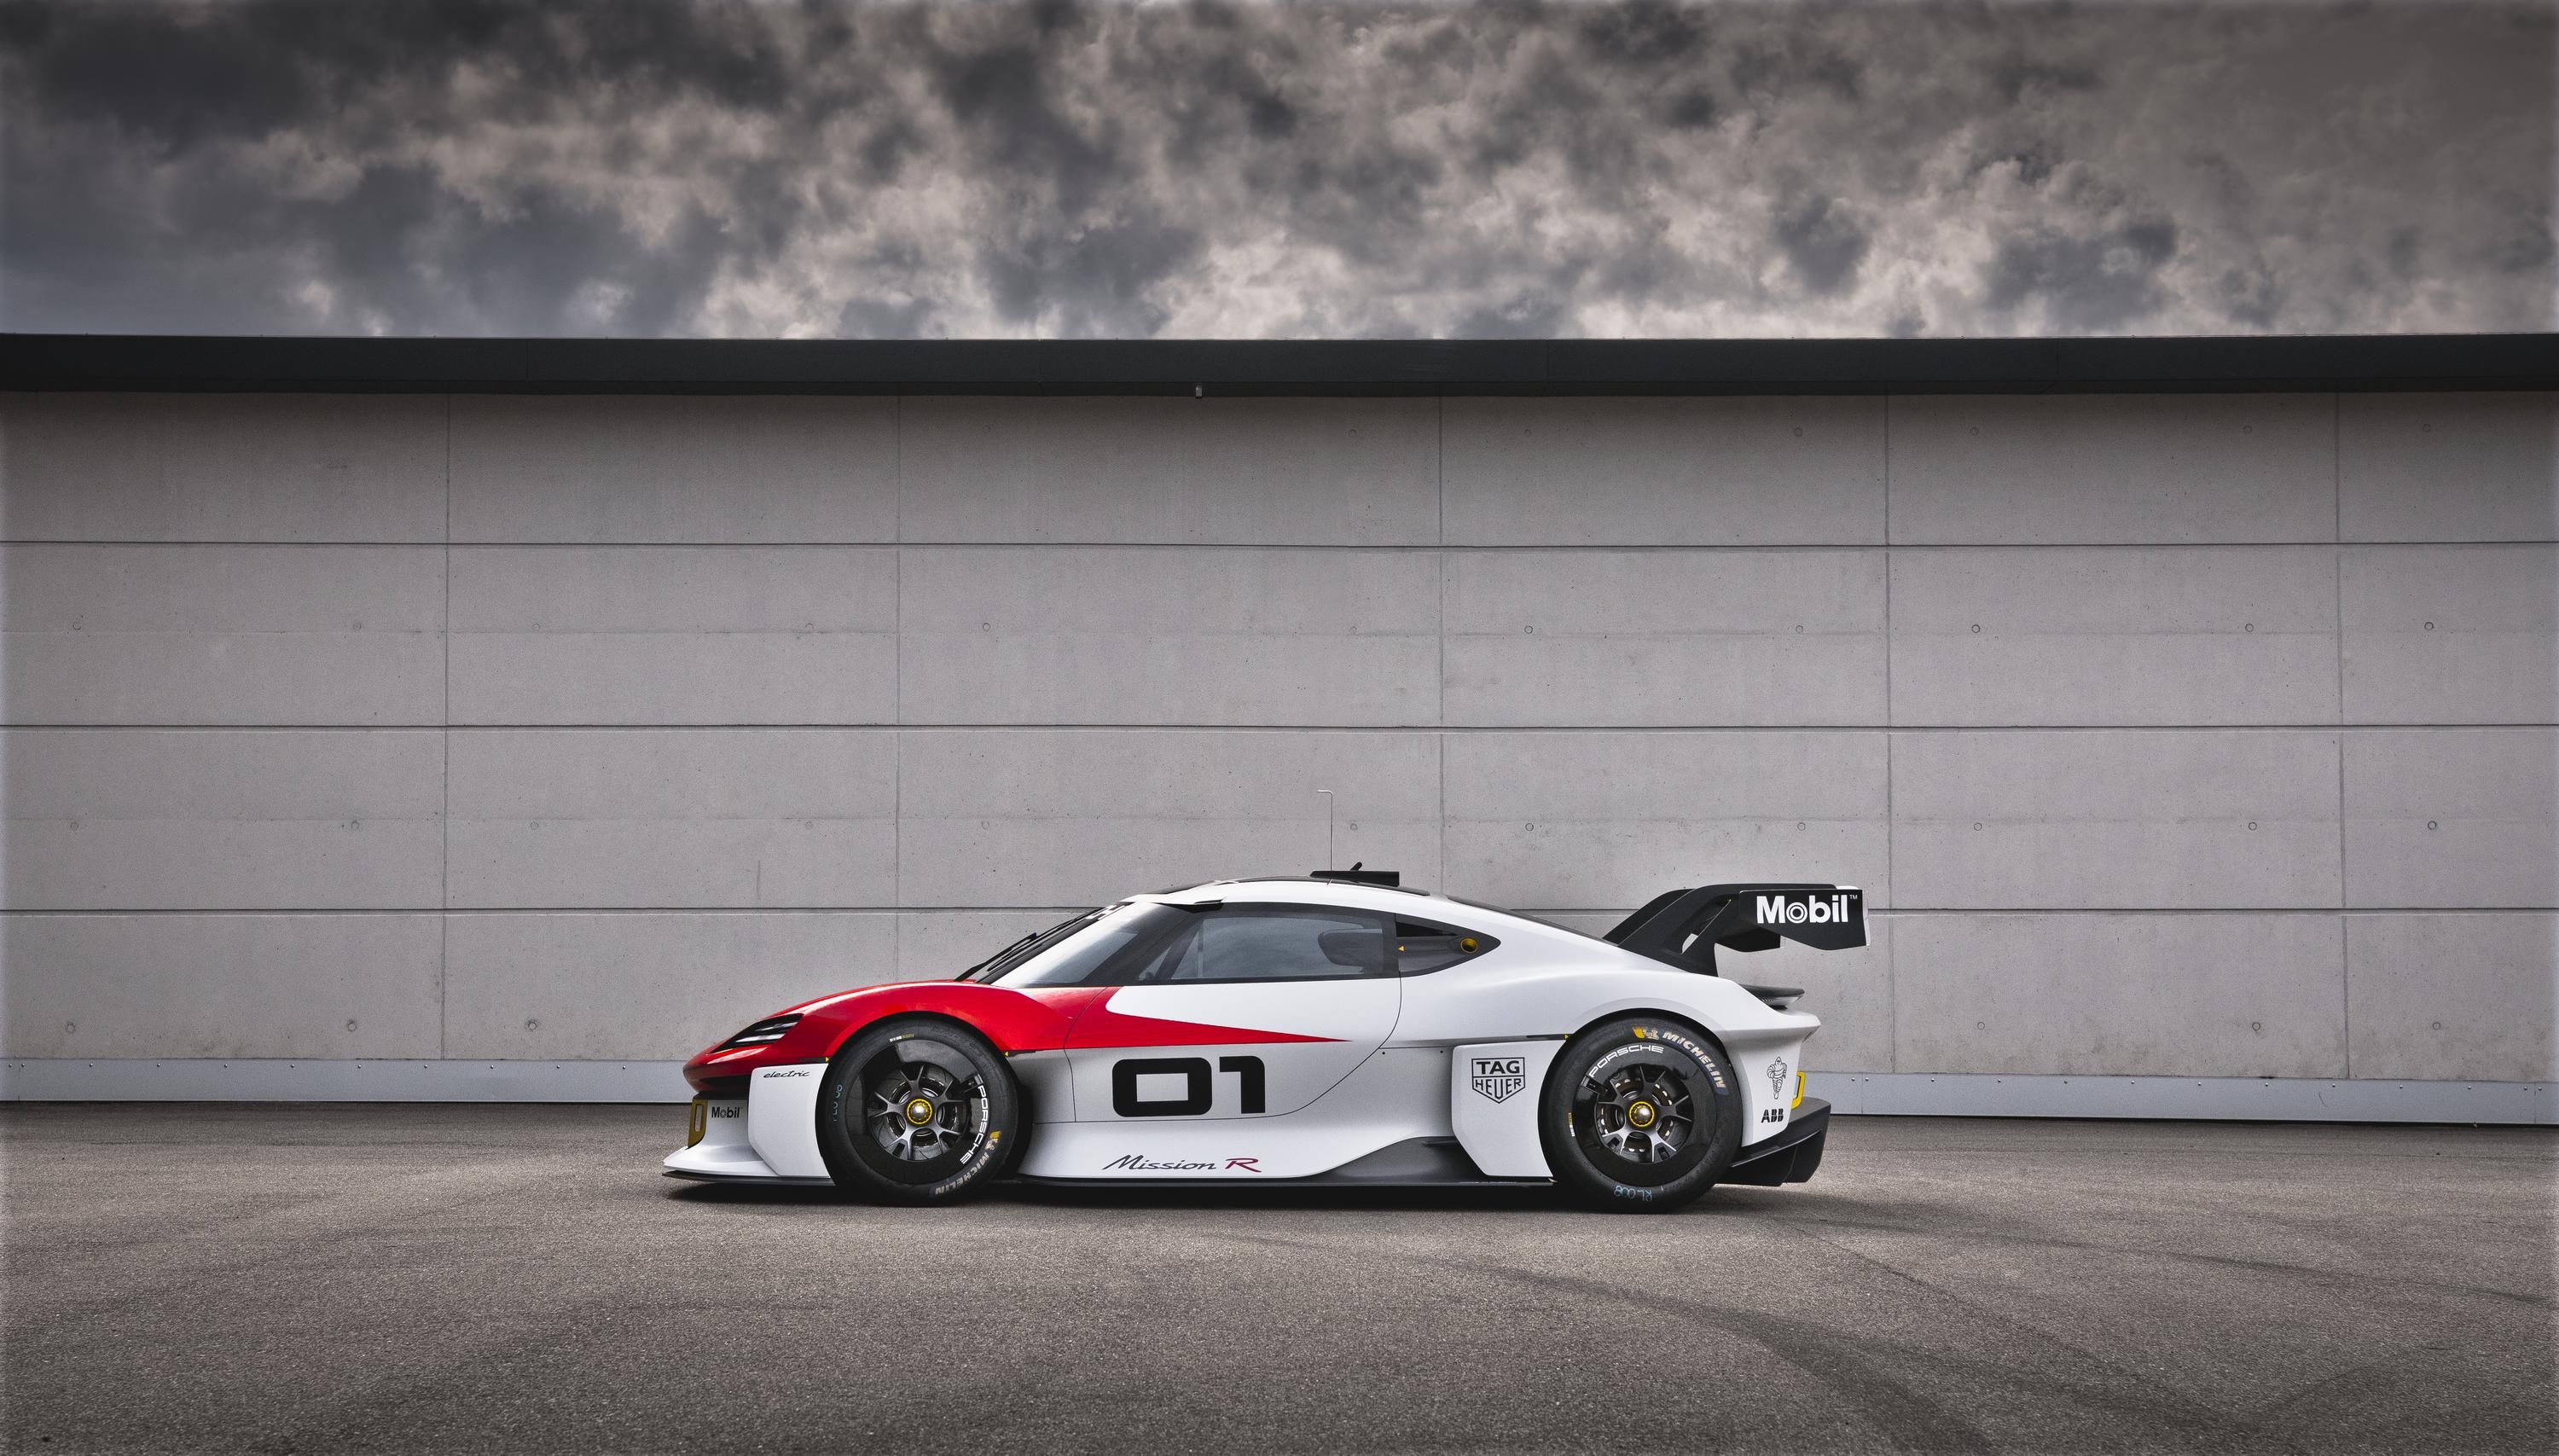 2021 Porsche Mission R concept #642574 - Best quality free high